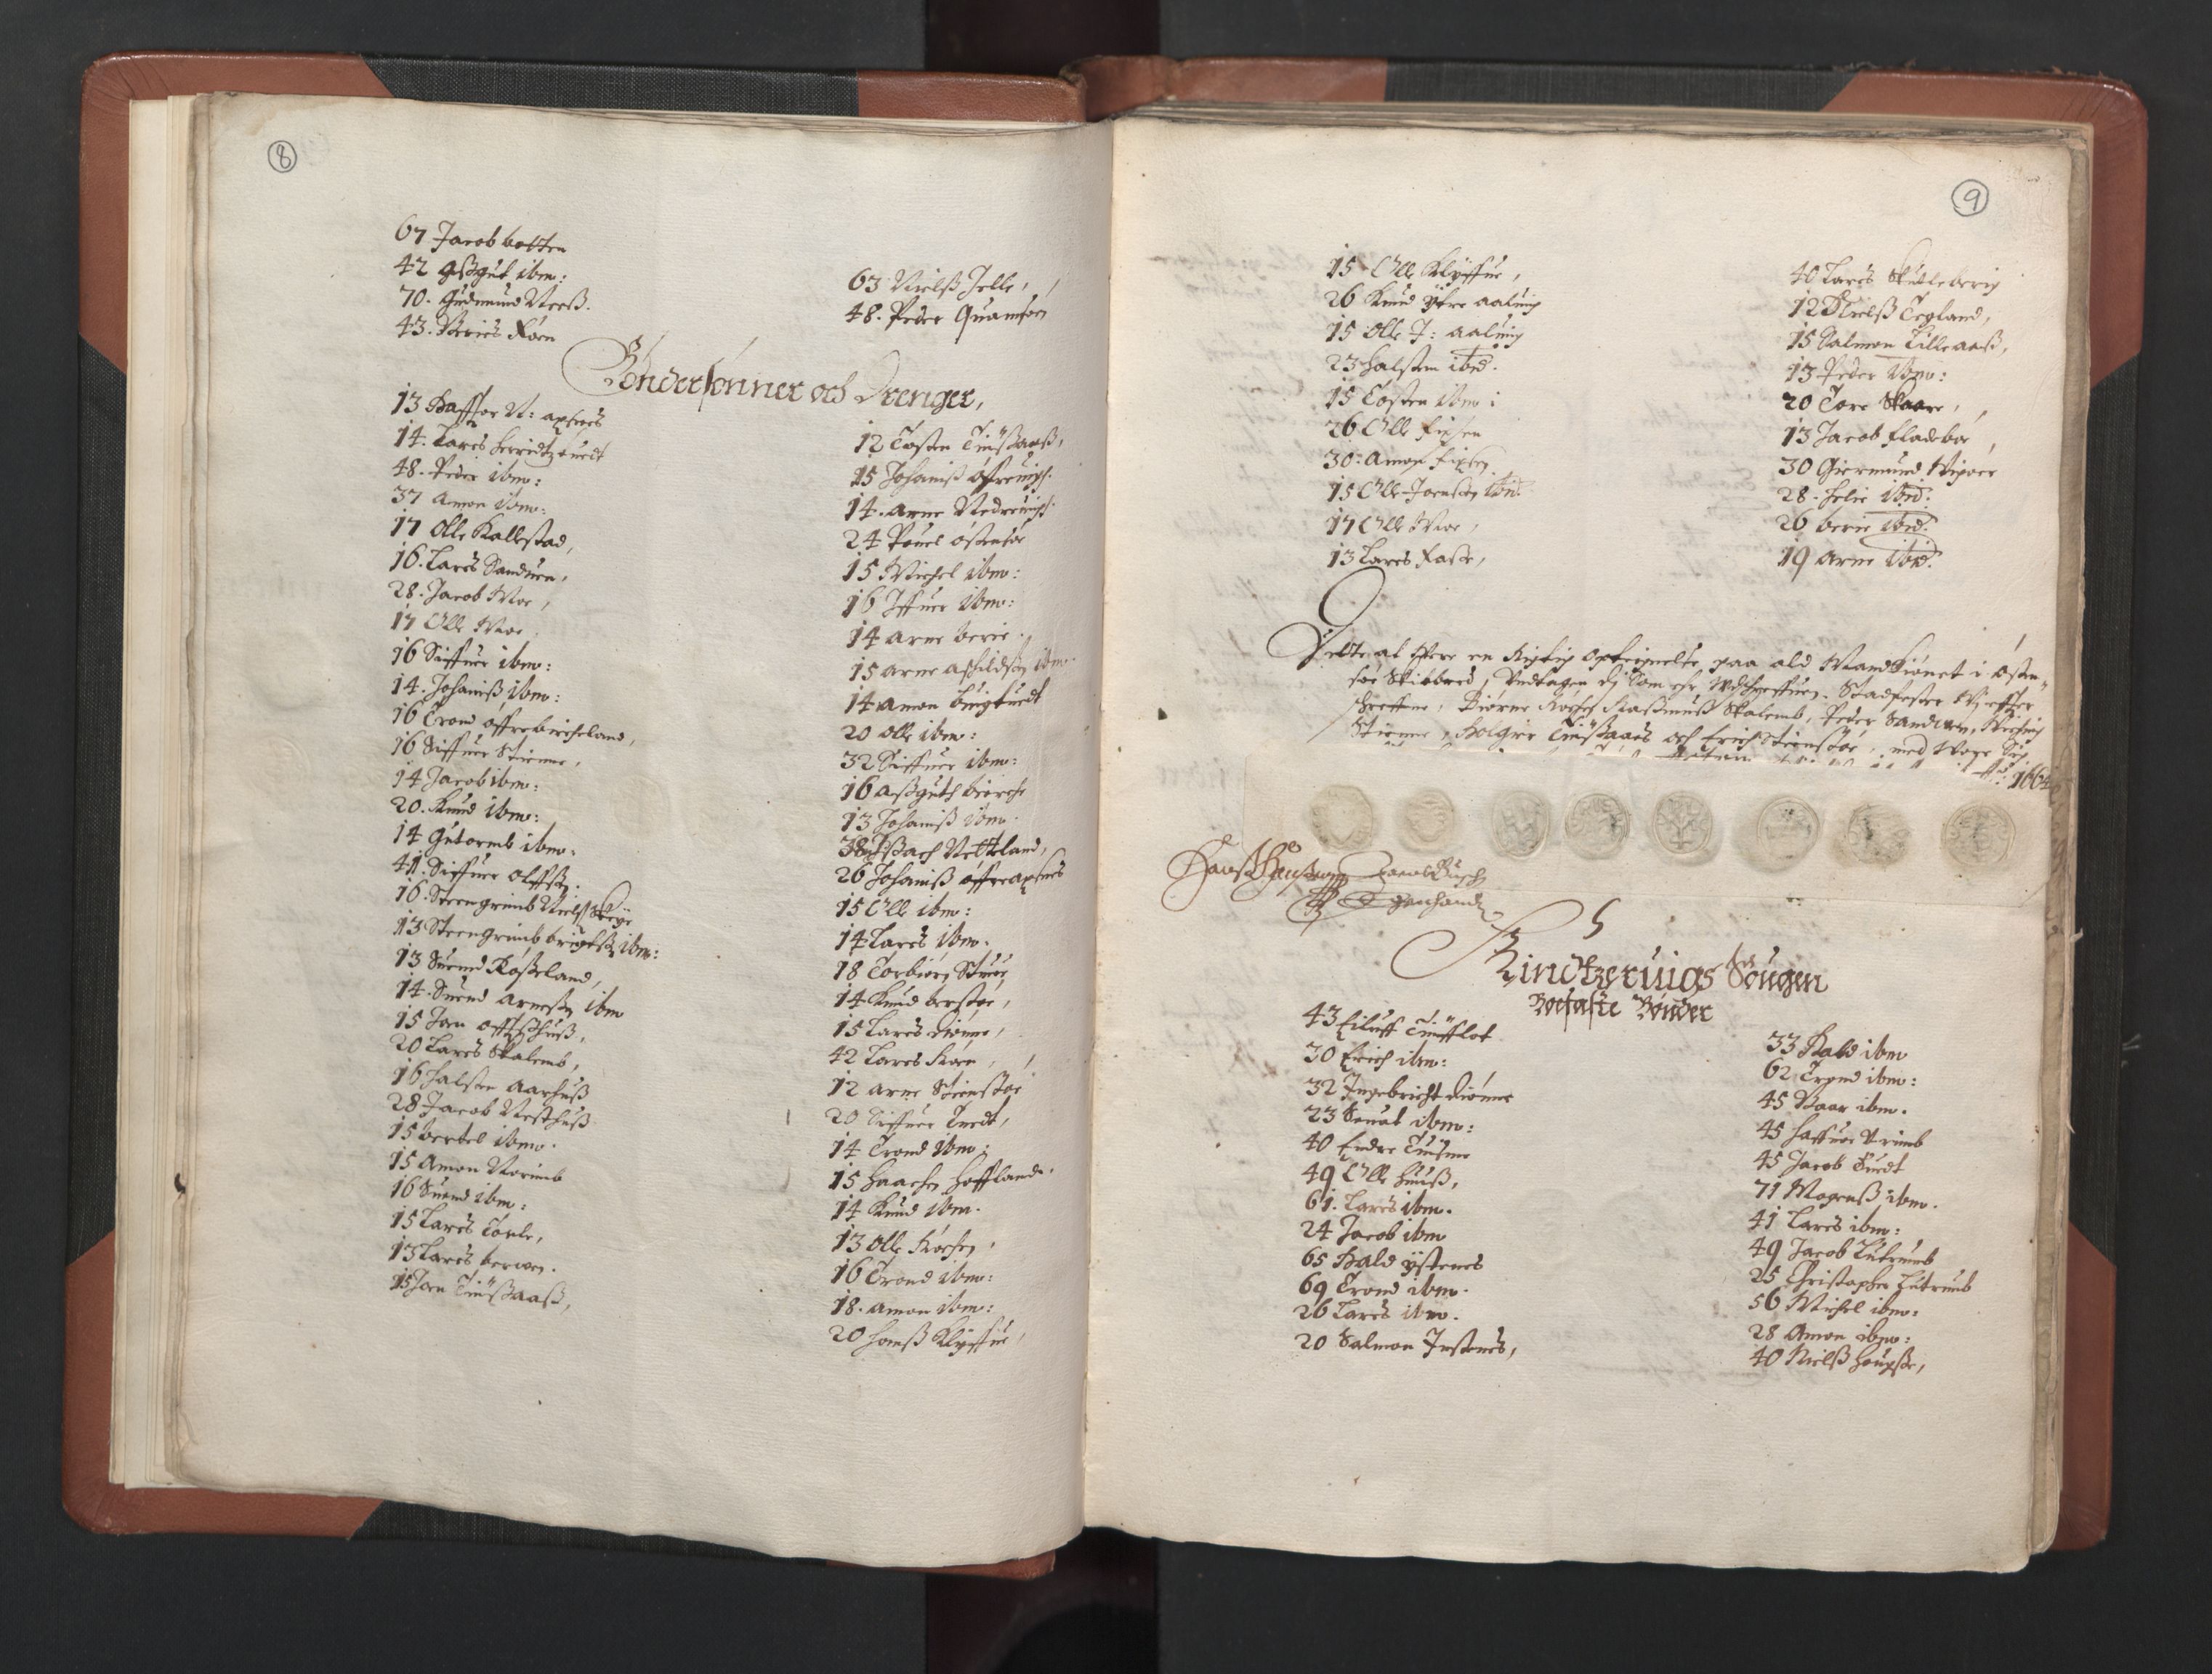 RA, Fogdenes og sorenskrivernes manntall 1664-1666, nr. 14: Hardanger len, Ytre Sogn fogderi og Indre Sogn fogderi, 1664-1665, s. 8-9